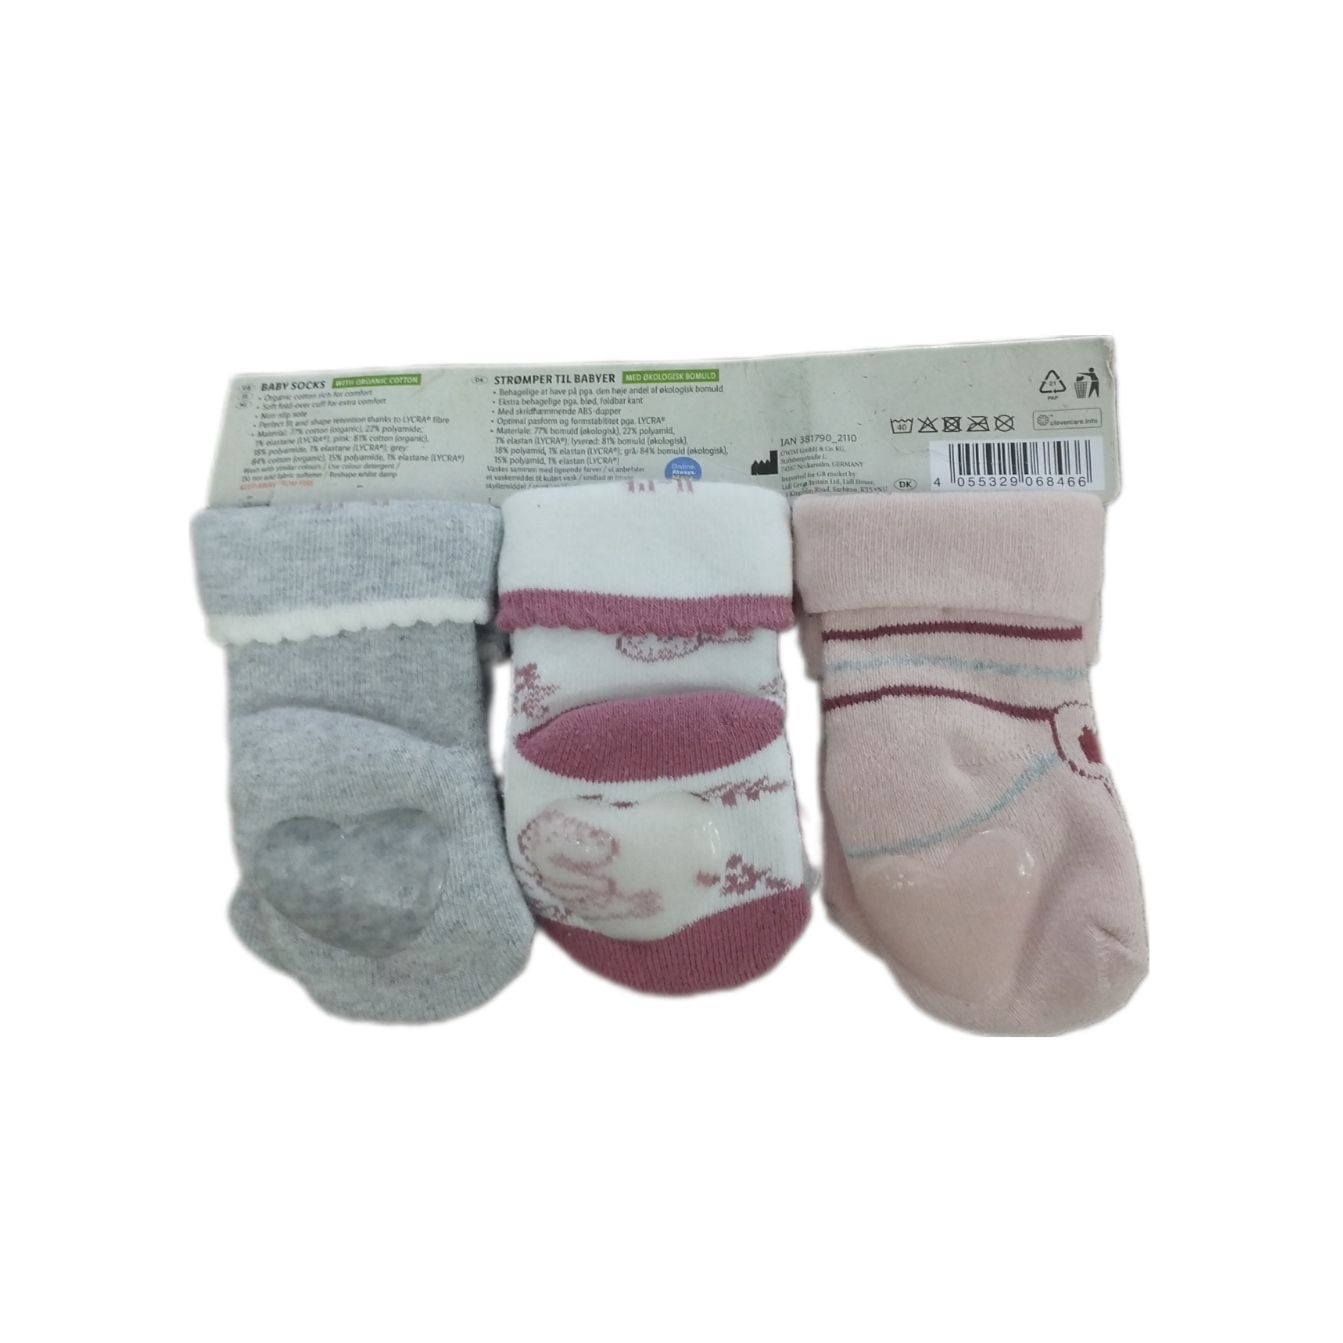 جوراب ساق کوتاه نوزادی لوپیلو مدل Best cotton مجموعه سه عددی 